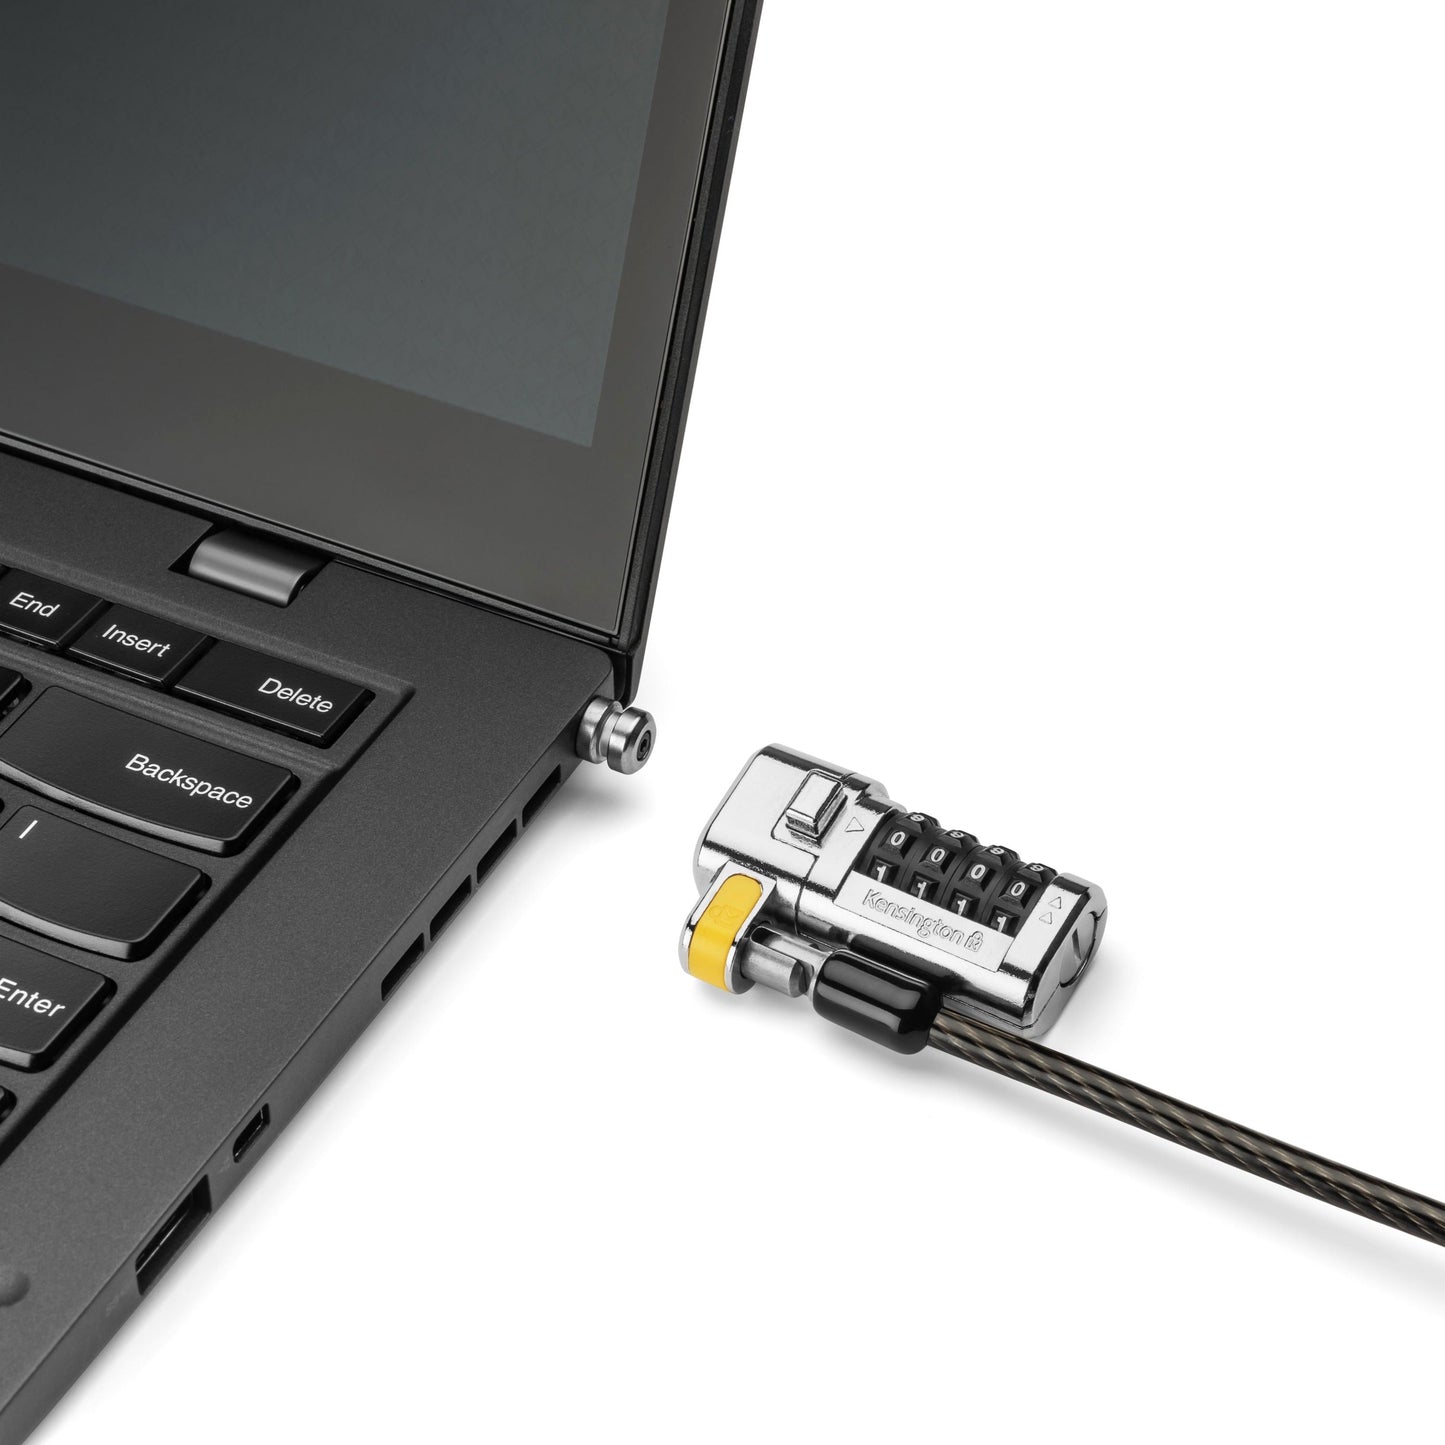 Kensington ClickSafe Universal Combination Laptop Lock - Master Coded